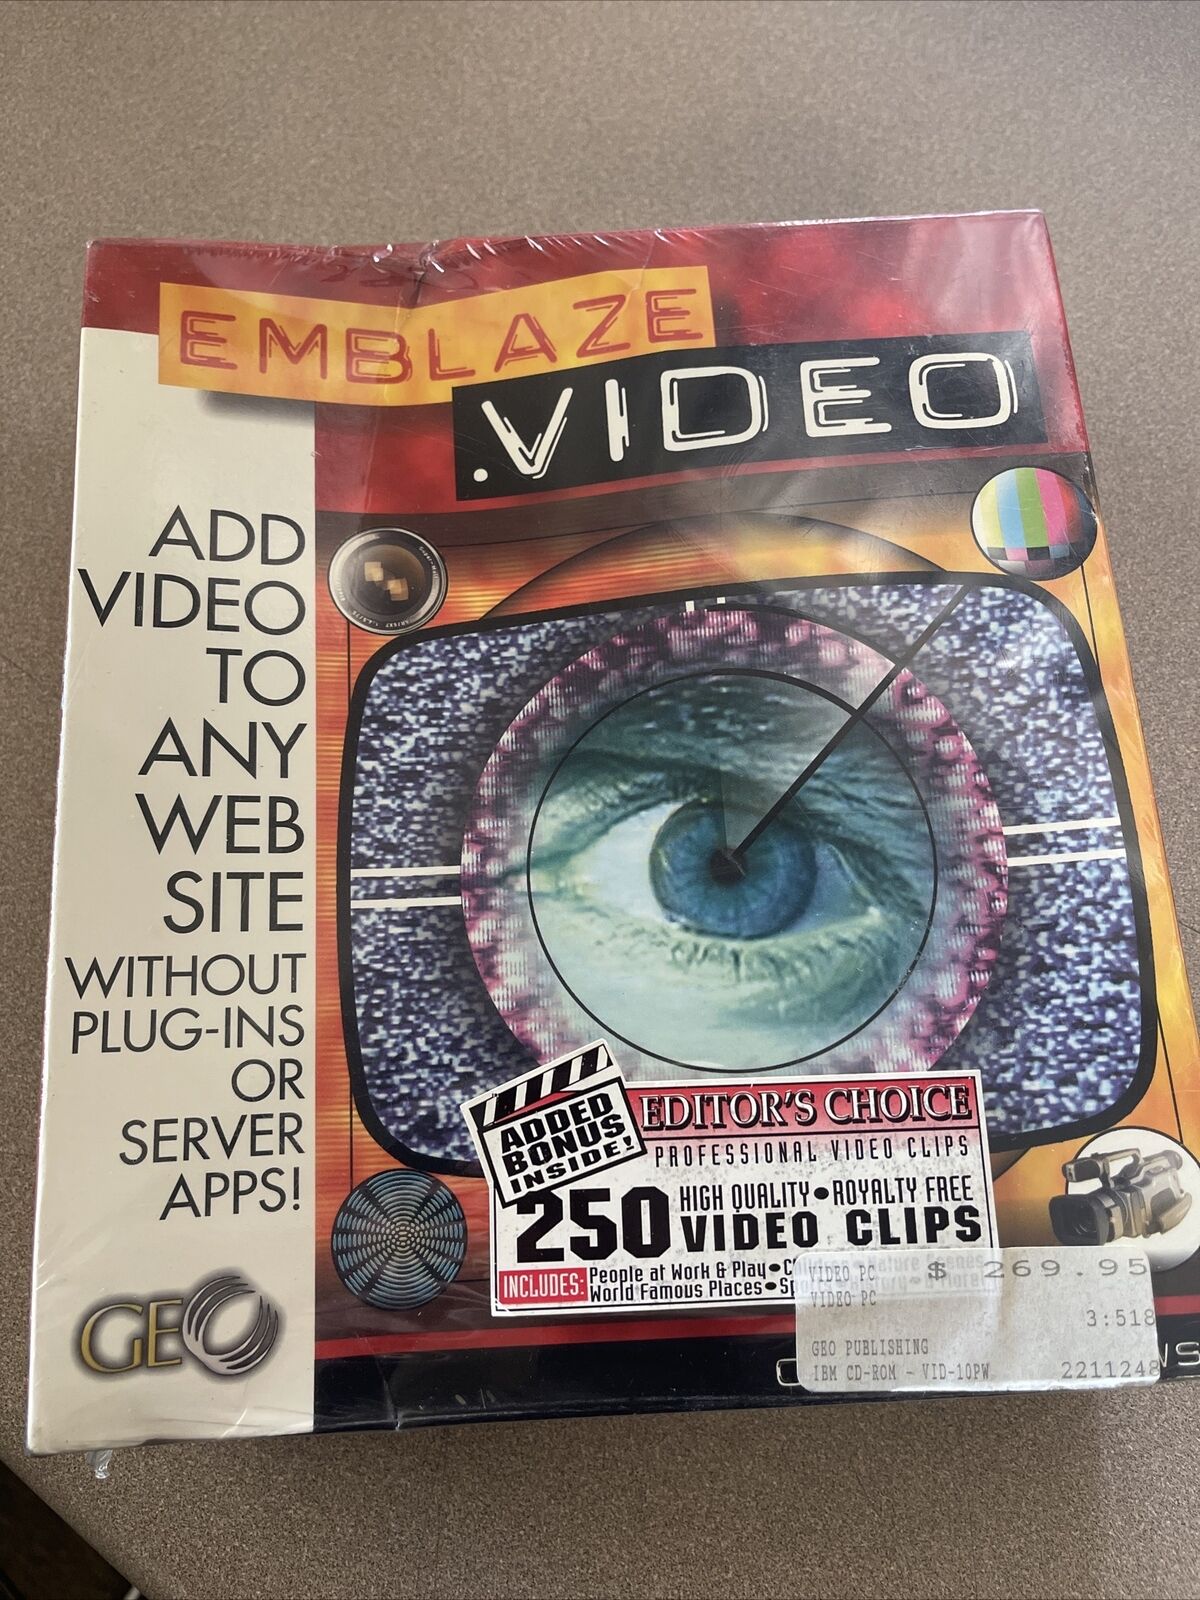 NEW-Emblaze Video Geo Windows PC Mac Software Disc Original Package Sealed 97